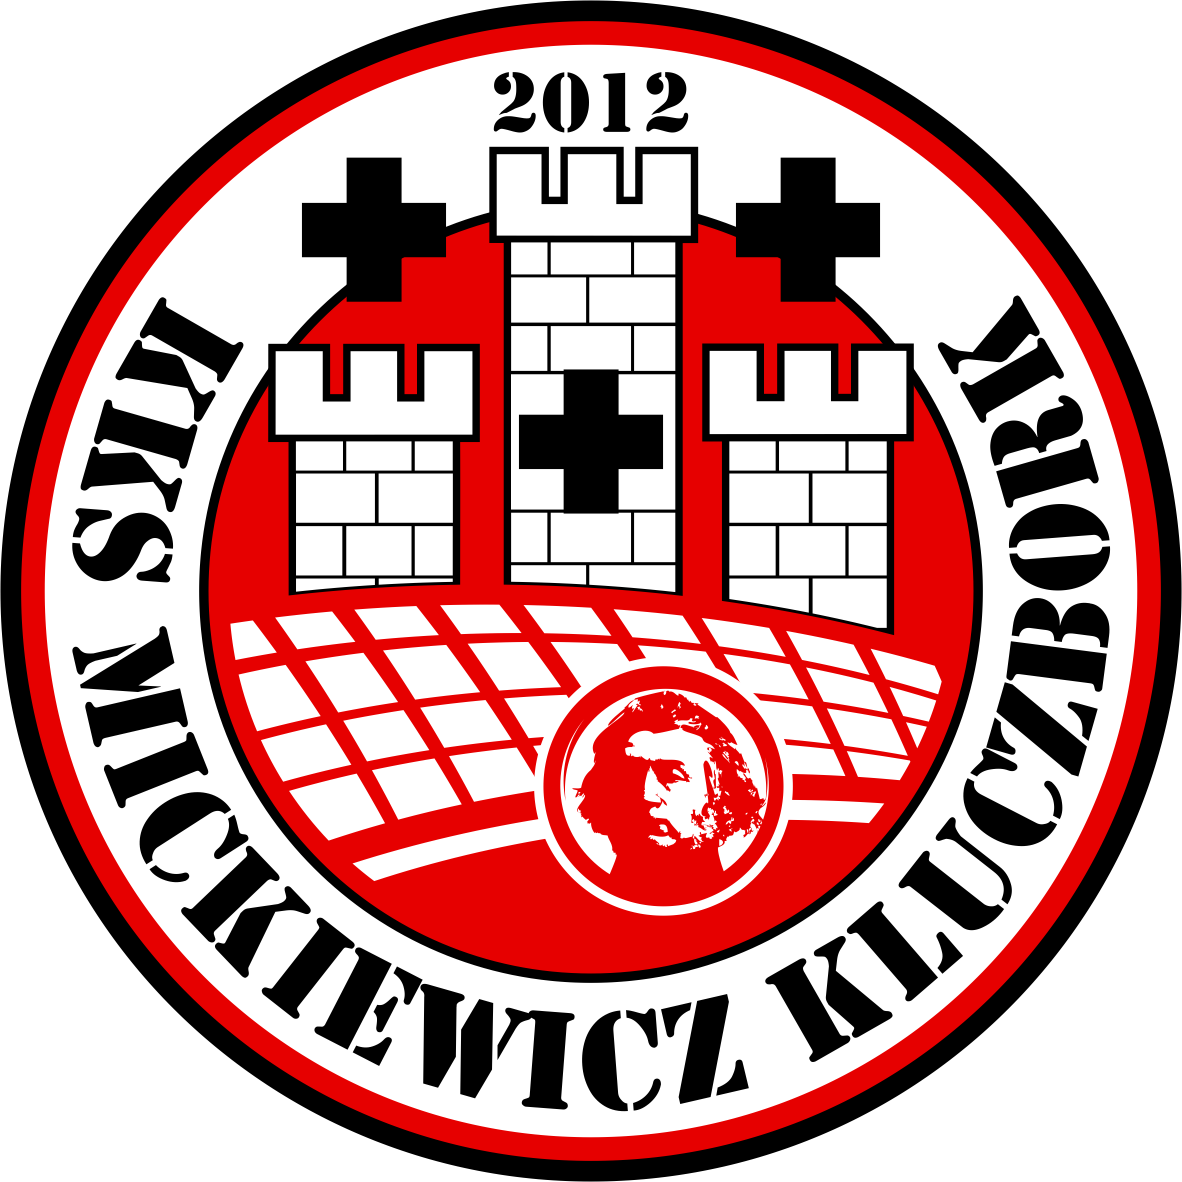 KKS Mickiewicz Kluczbork